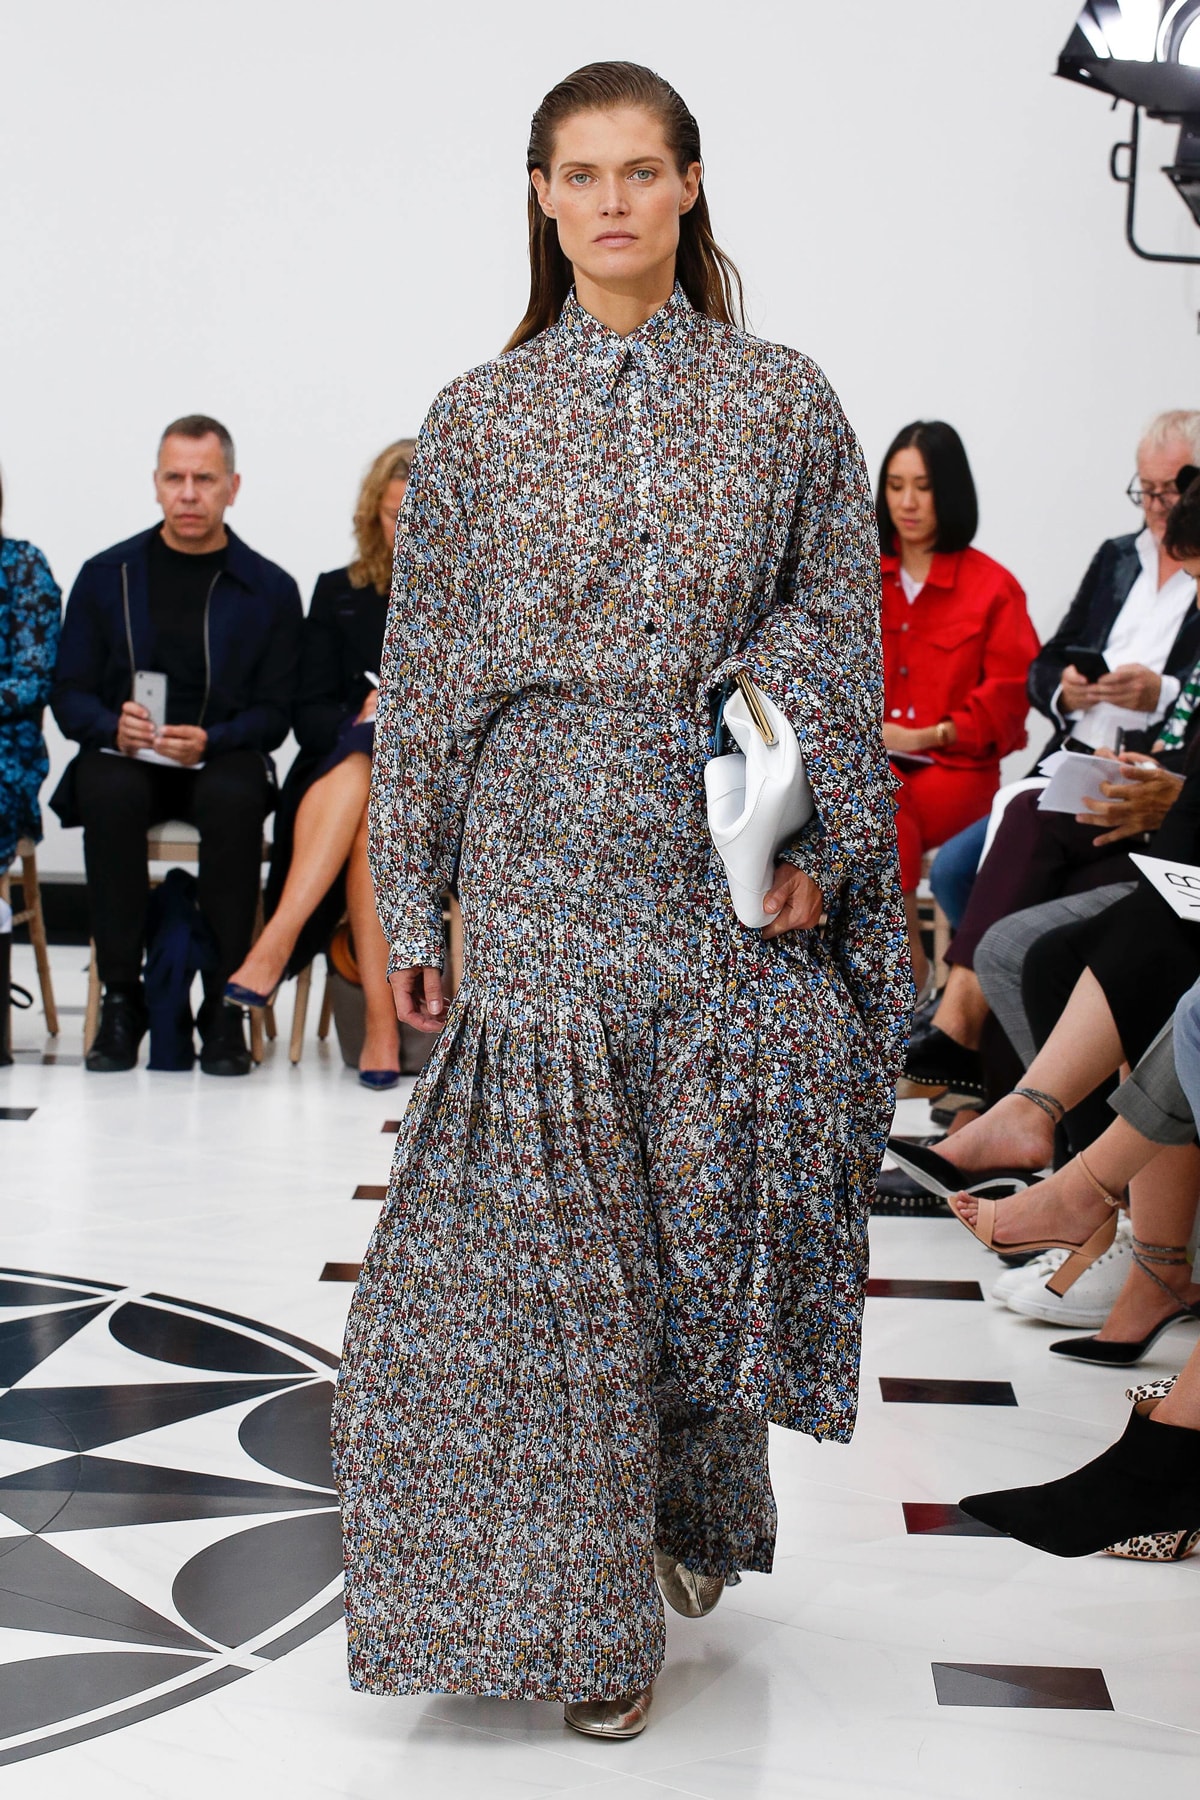 Victoria Beckham Spring Summer 2019 London Fashion Week Show Collection Dress Grey